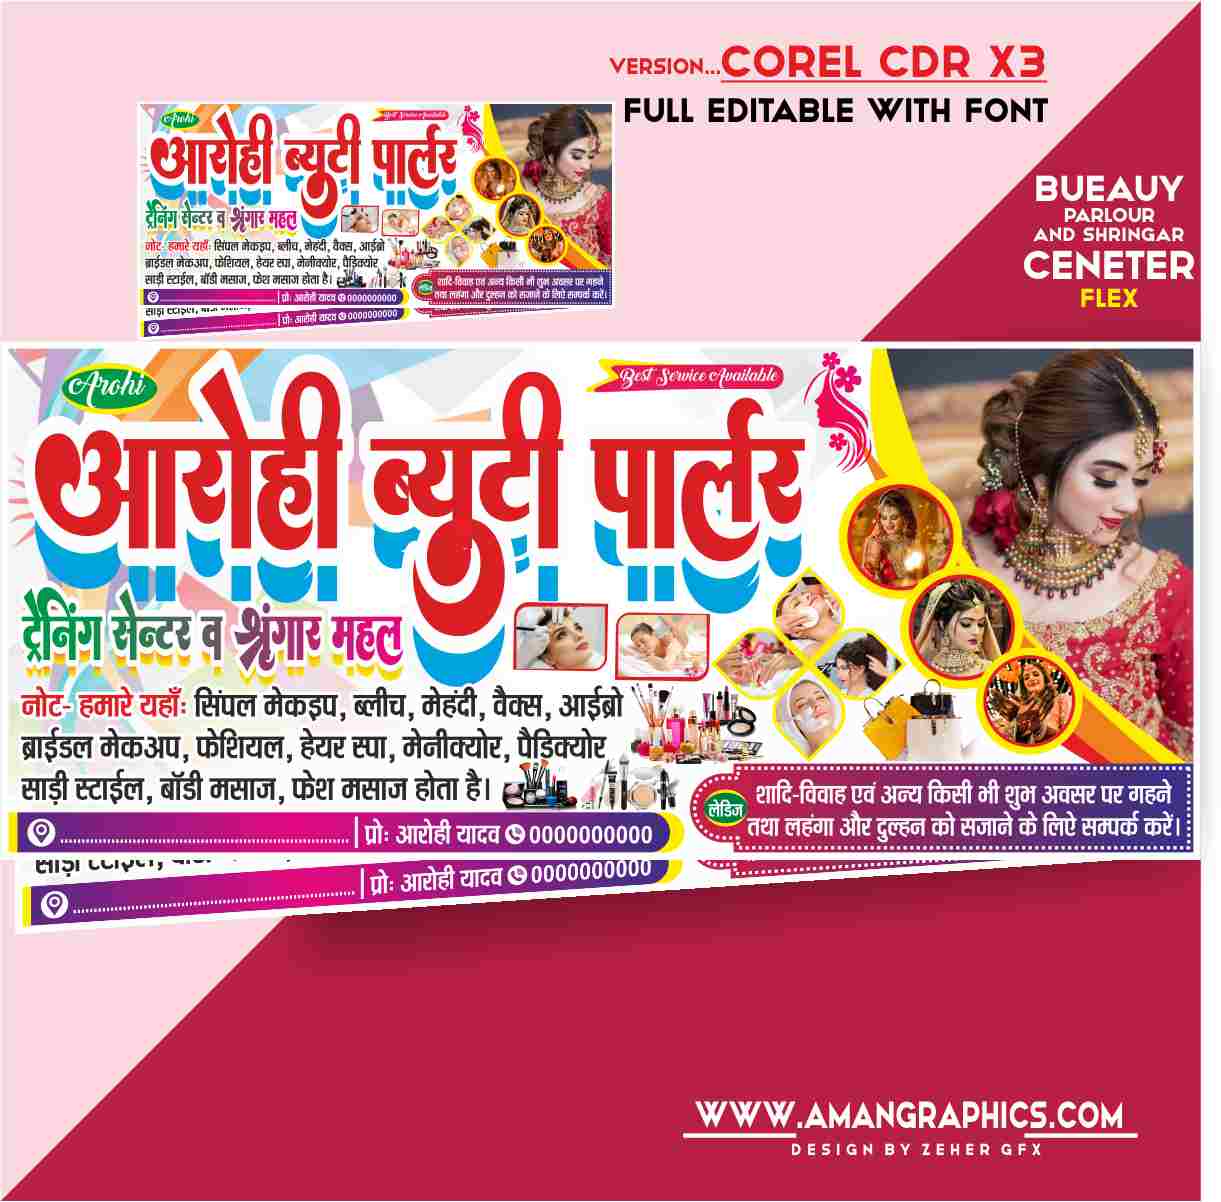 Arohi Beauty Parlour And Training Center & Shringar Mahal Banner Design Cdr File